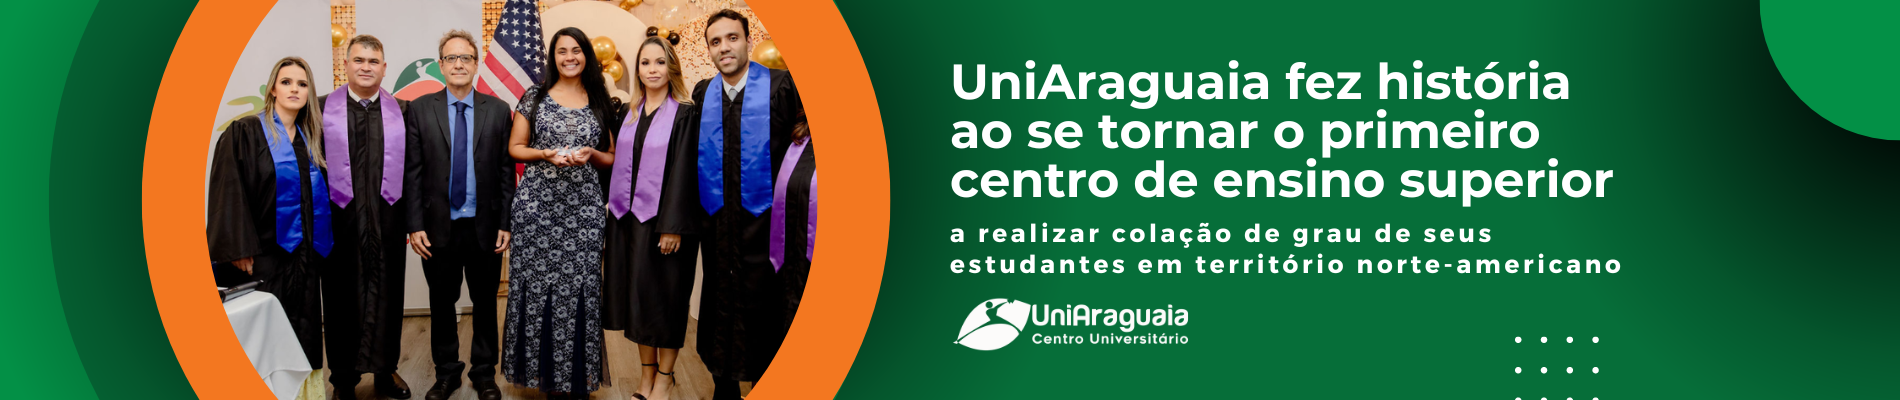 UniAraguaia USA - IEB - Centro Universitário